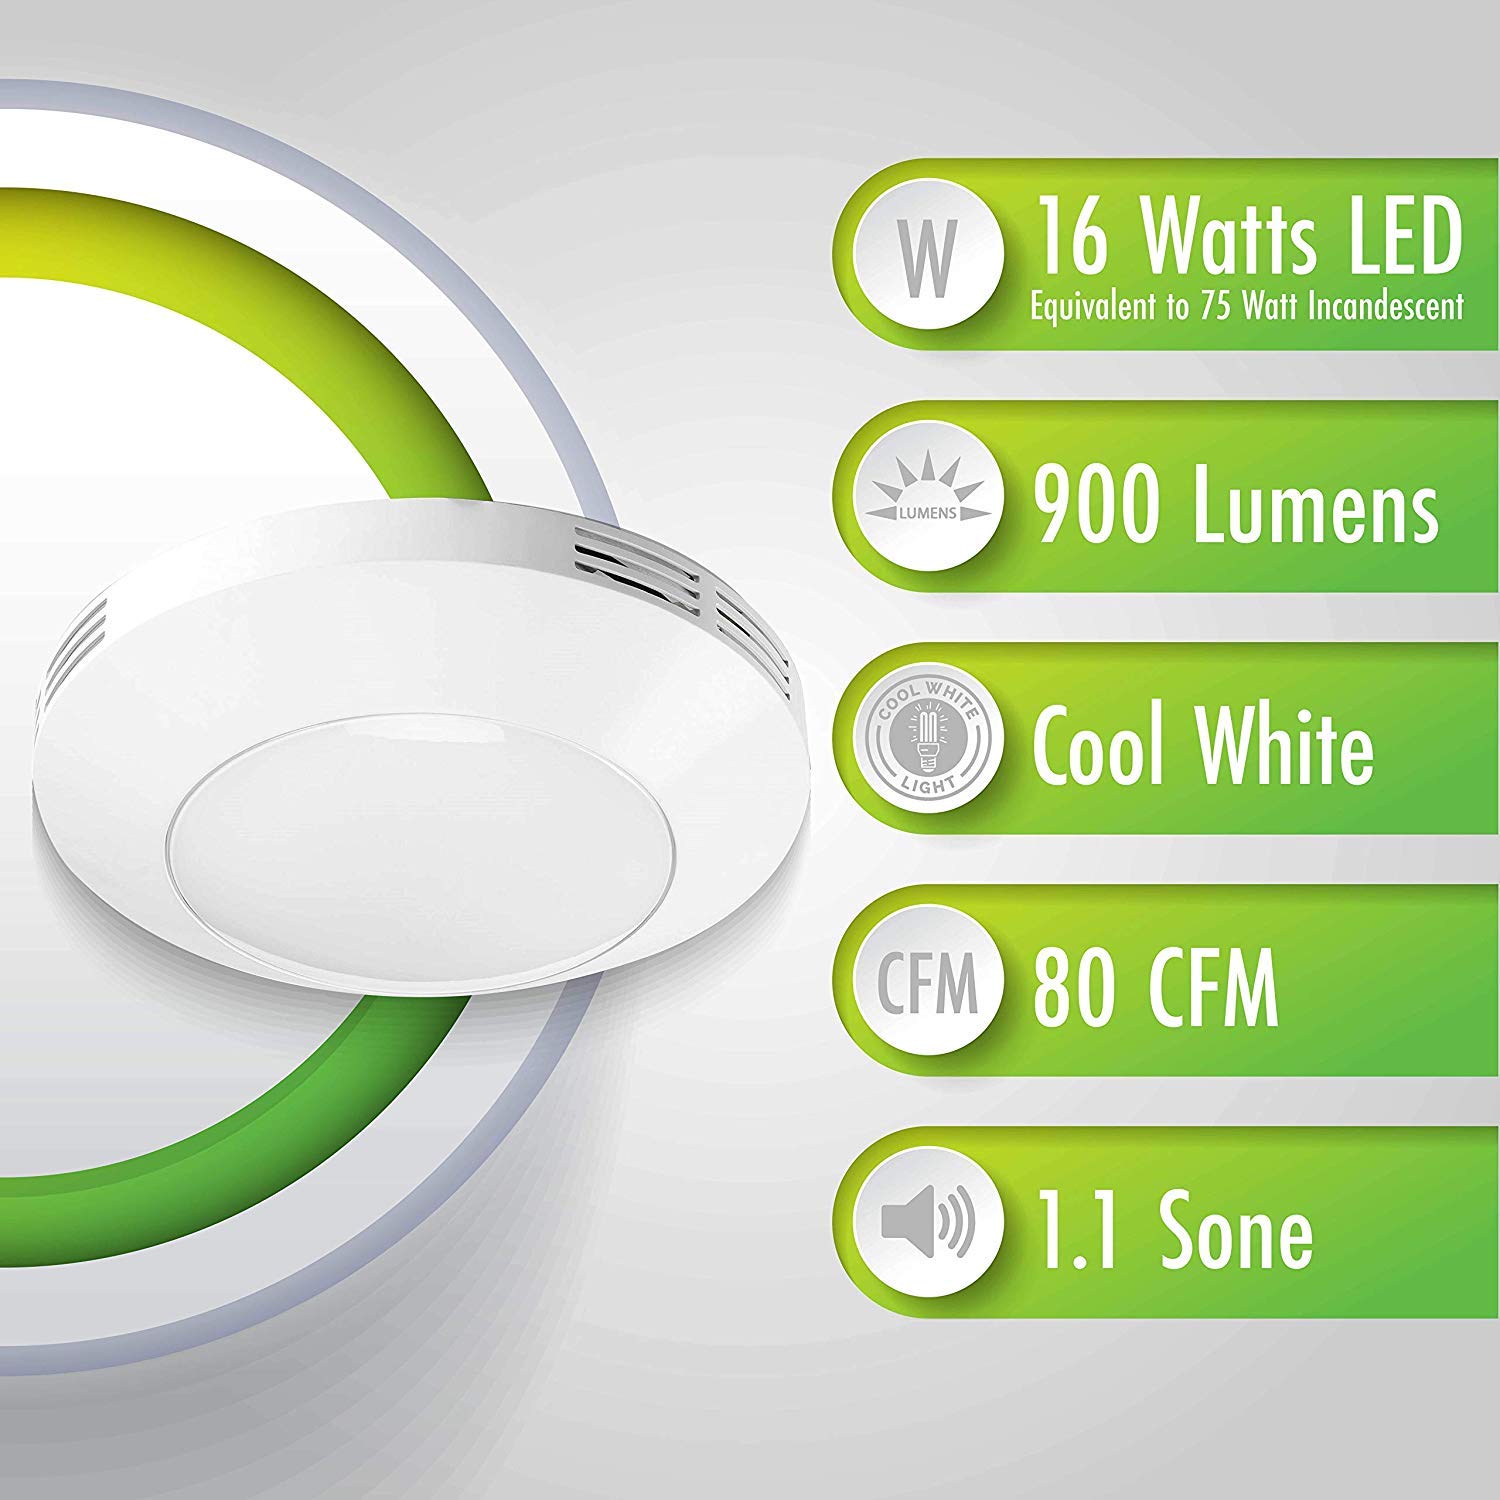 Homewerks 7117-01-WH Bathroom Integrated LED Light Ceiling Mount Exhaust Ventilation 1.1 Sones 80 CFM, Bath Fan White